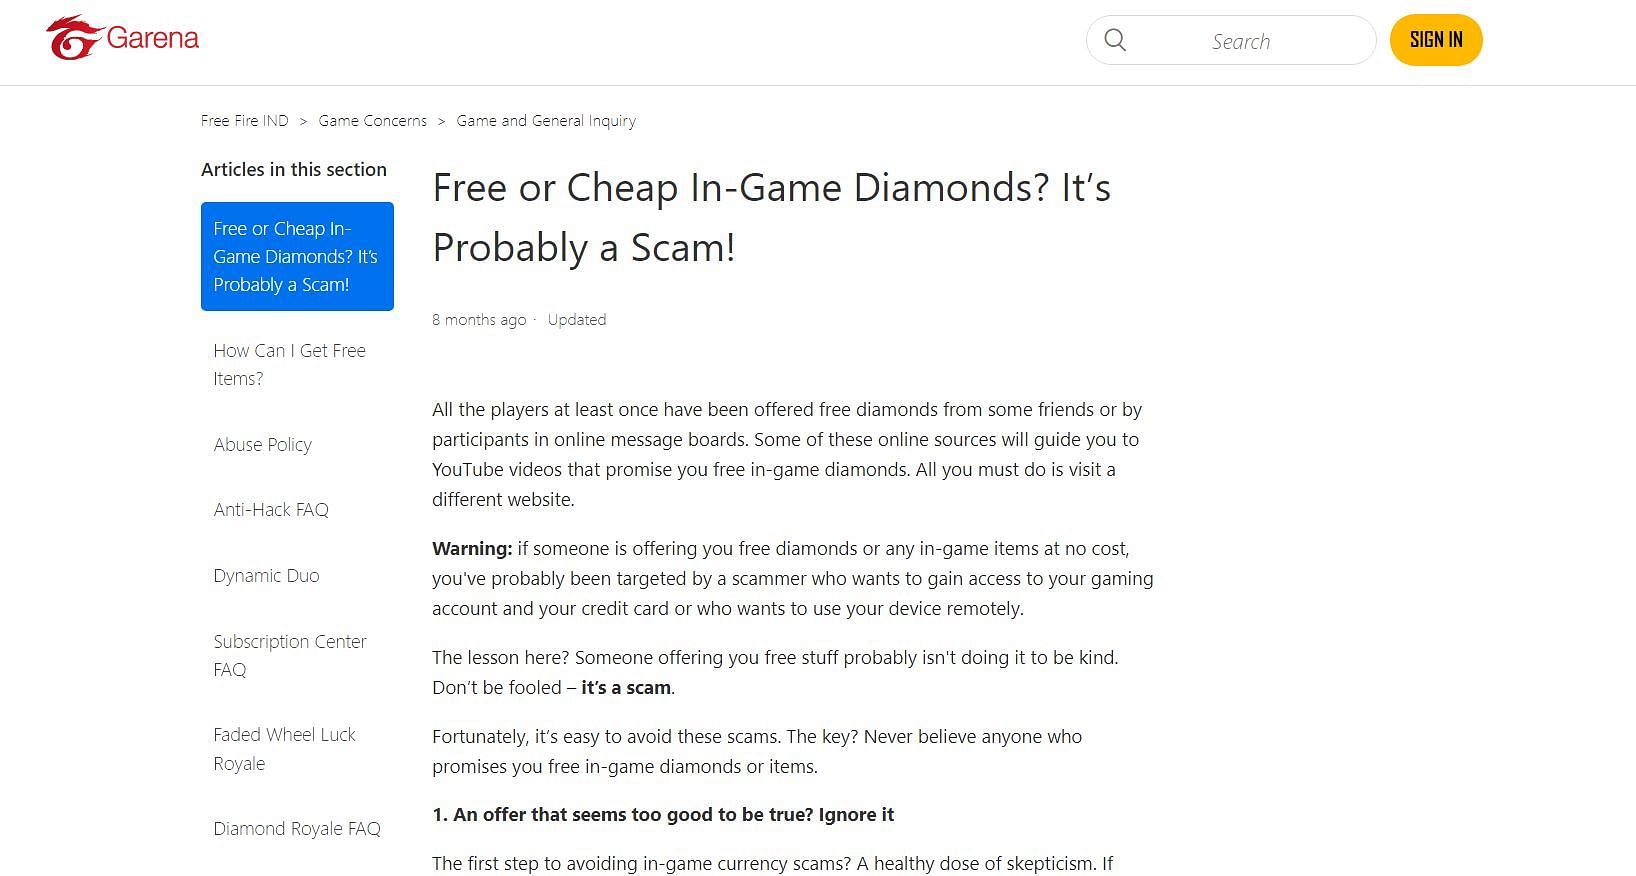 Diamond-related scams are quite prevalent (Image via Garena)